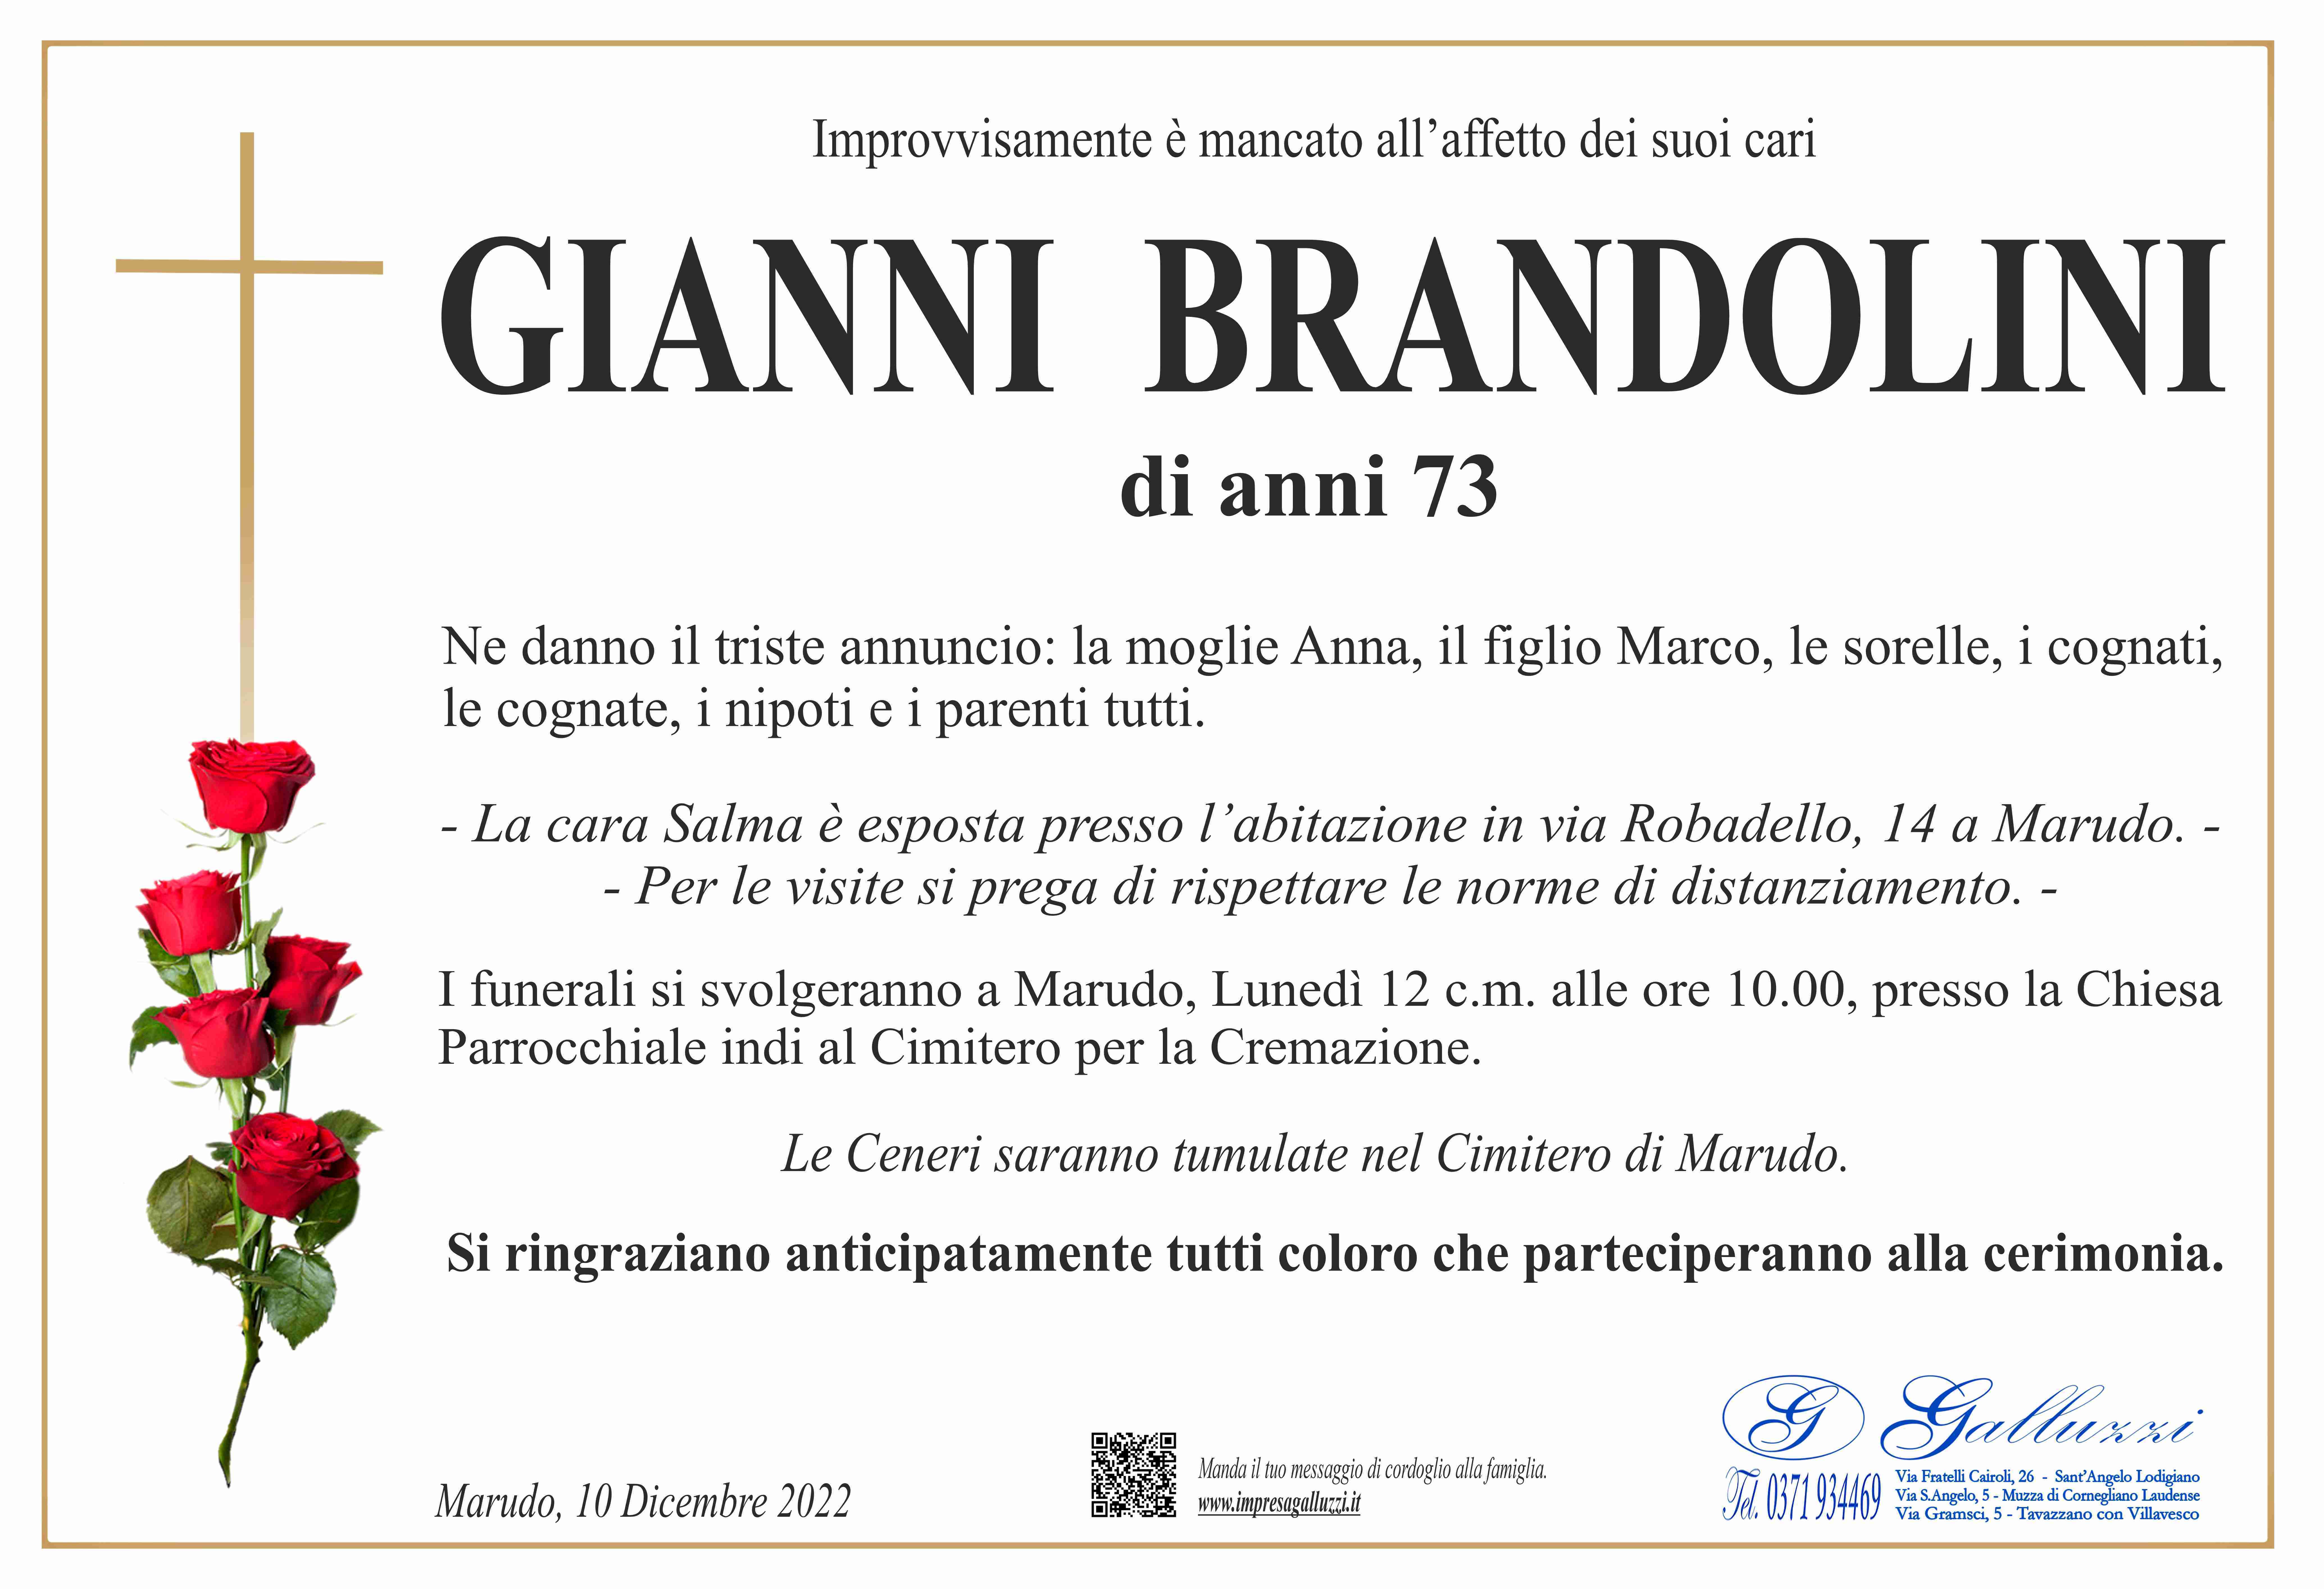 Gianni Brandolini